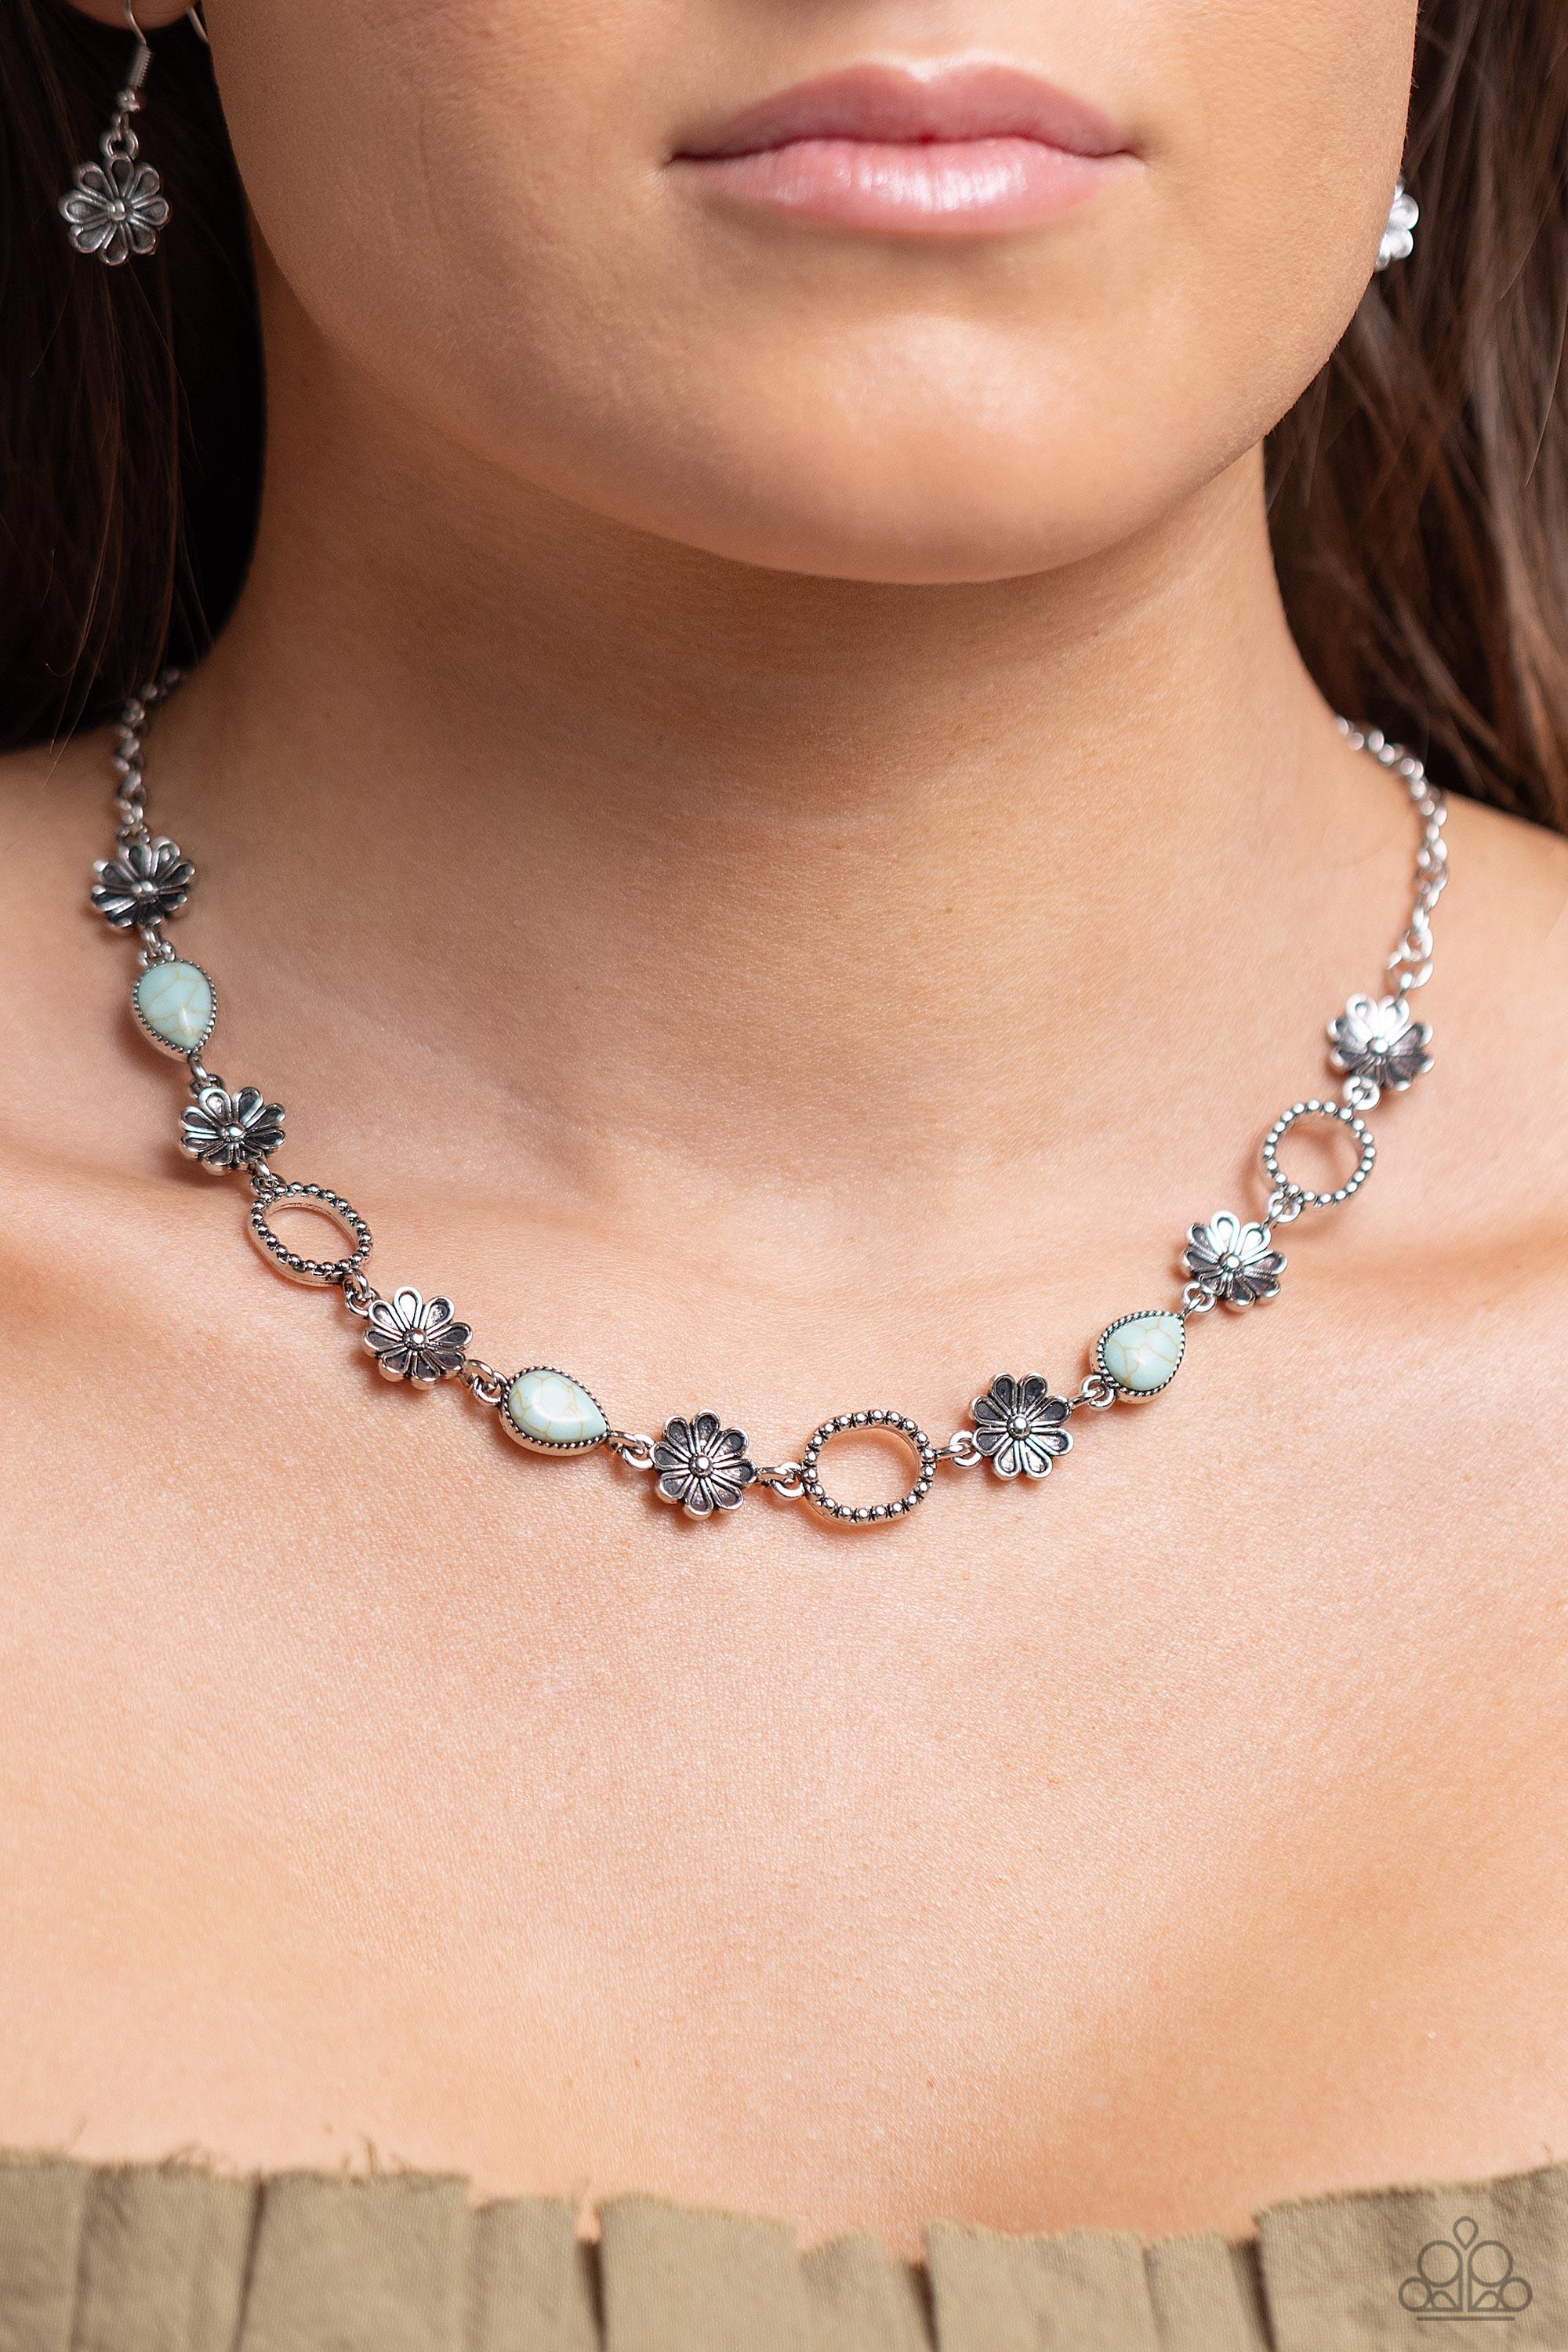 Casablanca Chic Blue Stone Necklace - Paparazzi Accessories- lightbox - CarasShop.com - $5 Jewelry by Cara Jewels